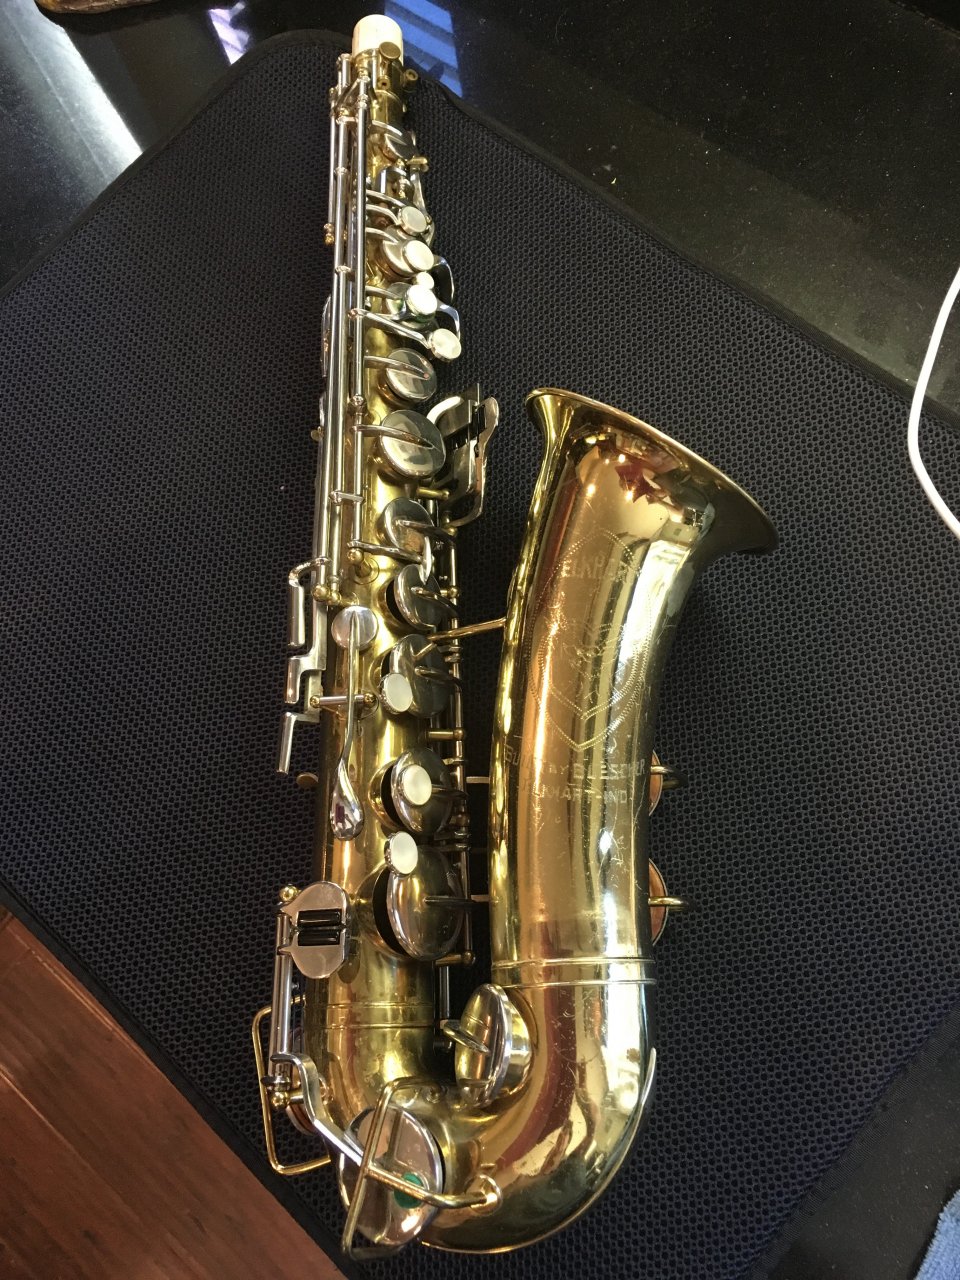 buescher aristocrat trumpet serial number